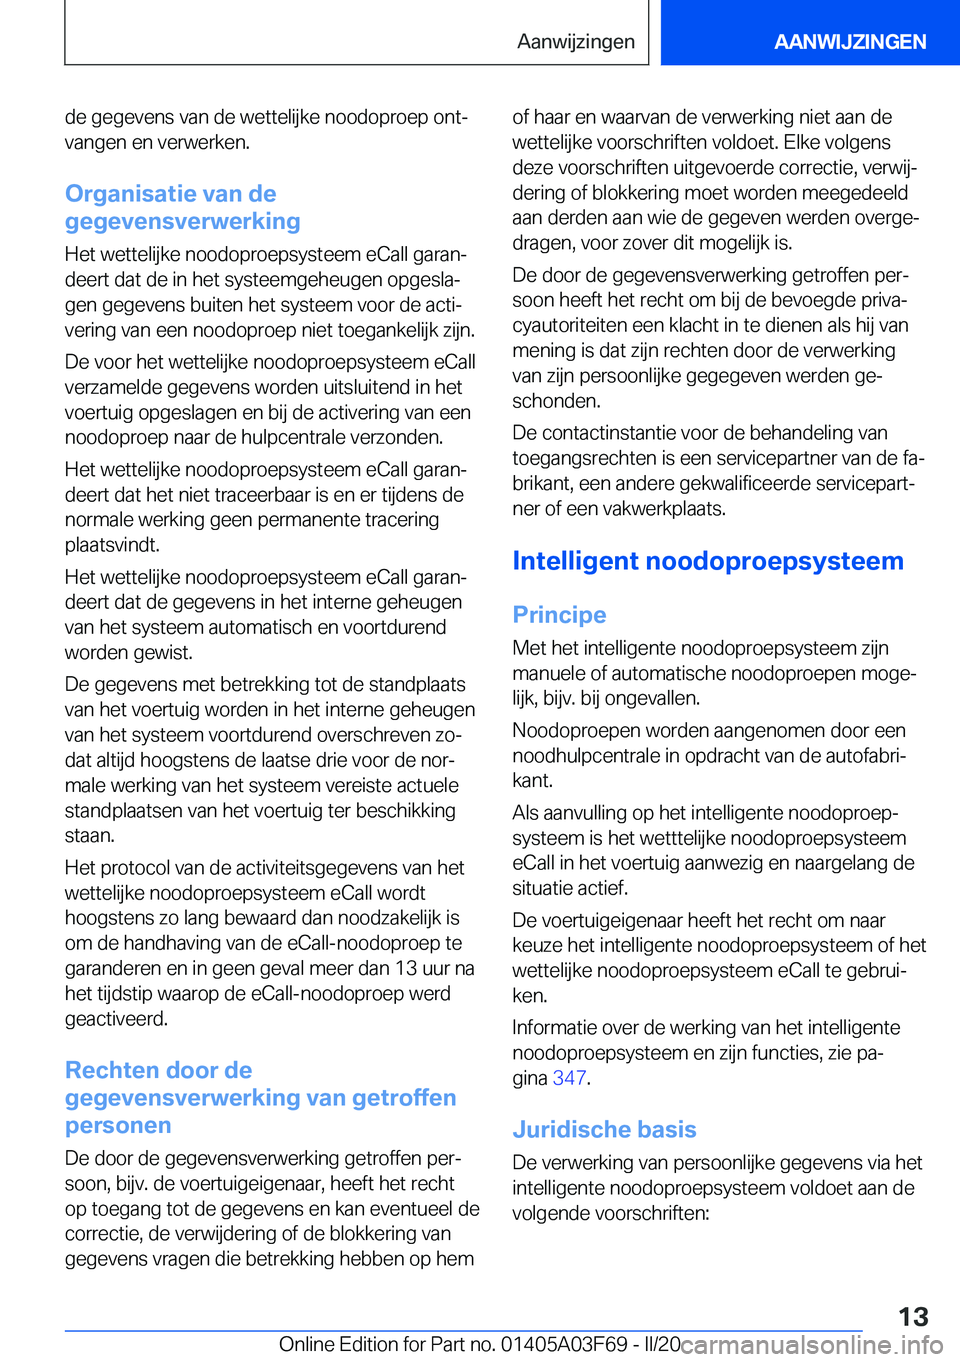 BMW 3 SERIES 2020  Instructieboekjes (in Dutch) �d�e��g�e�g�e�v�e�n�s��v�a�n��d�e��w�e�t�t�e�l�i�j�k�e��n�o�o�d�o�p�r�o�e�p��o�n�tj�v�a�n�g�e�n��e�n��v�e�r�w�e�r�k�e�n�.
�O�r�g�a�n�i�s�a�t�i�e��v�a�n��d�e
�g�e�g�e�v�e�n�s�v�e�r�w�e�r�k�i